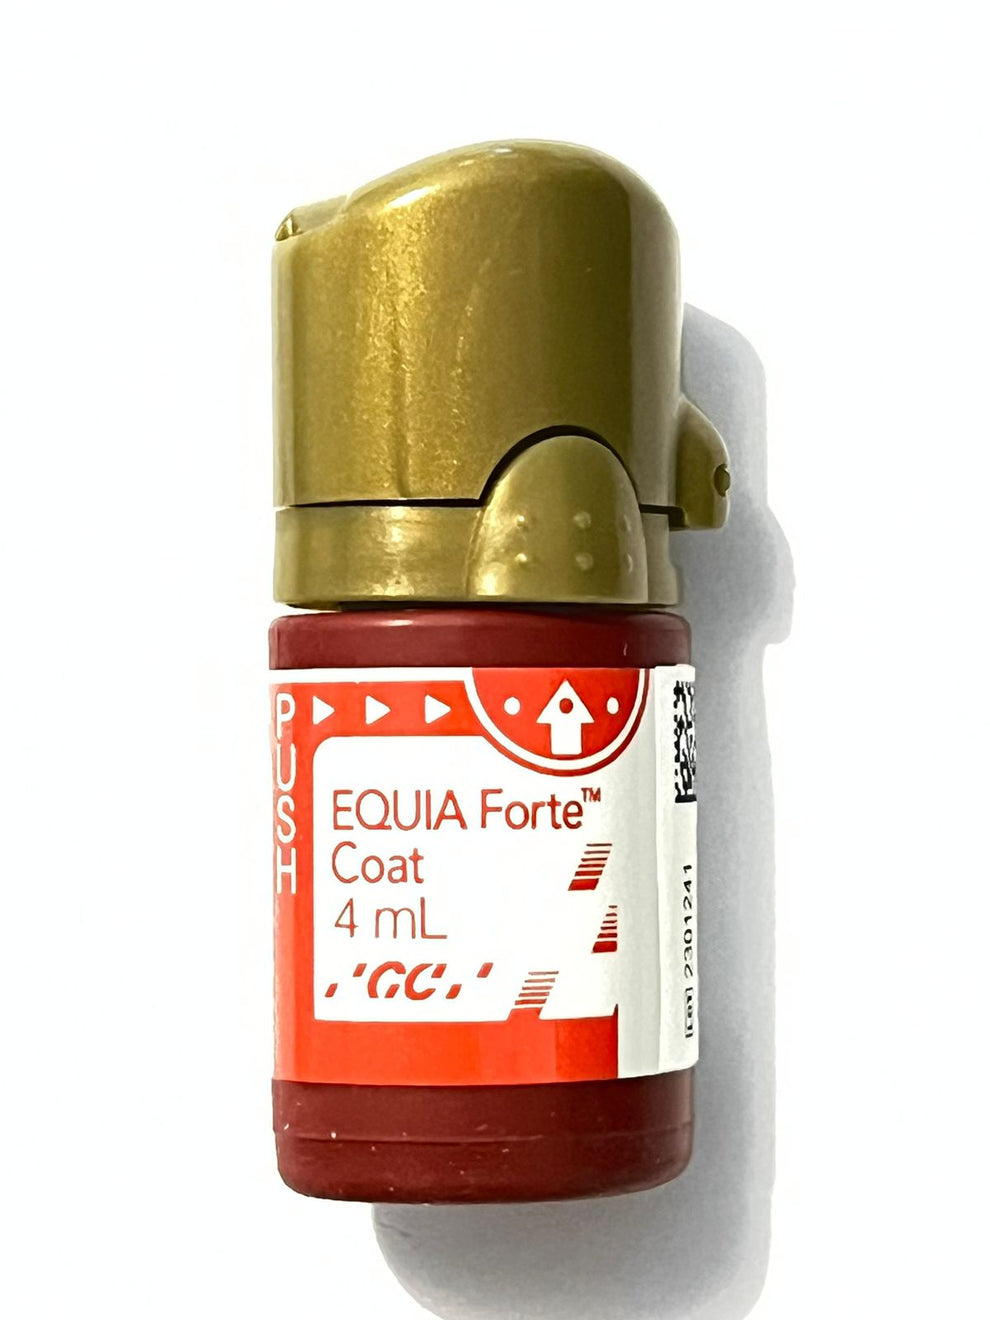 Equia forte coat 4ml – Deposito Dental Molar